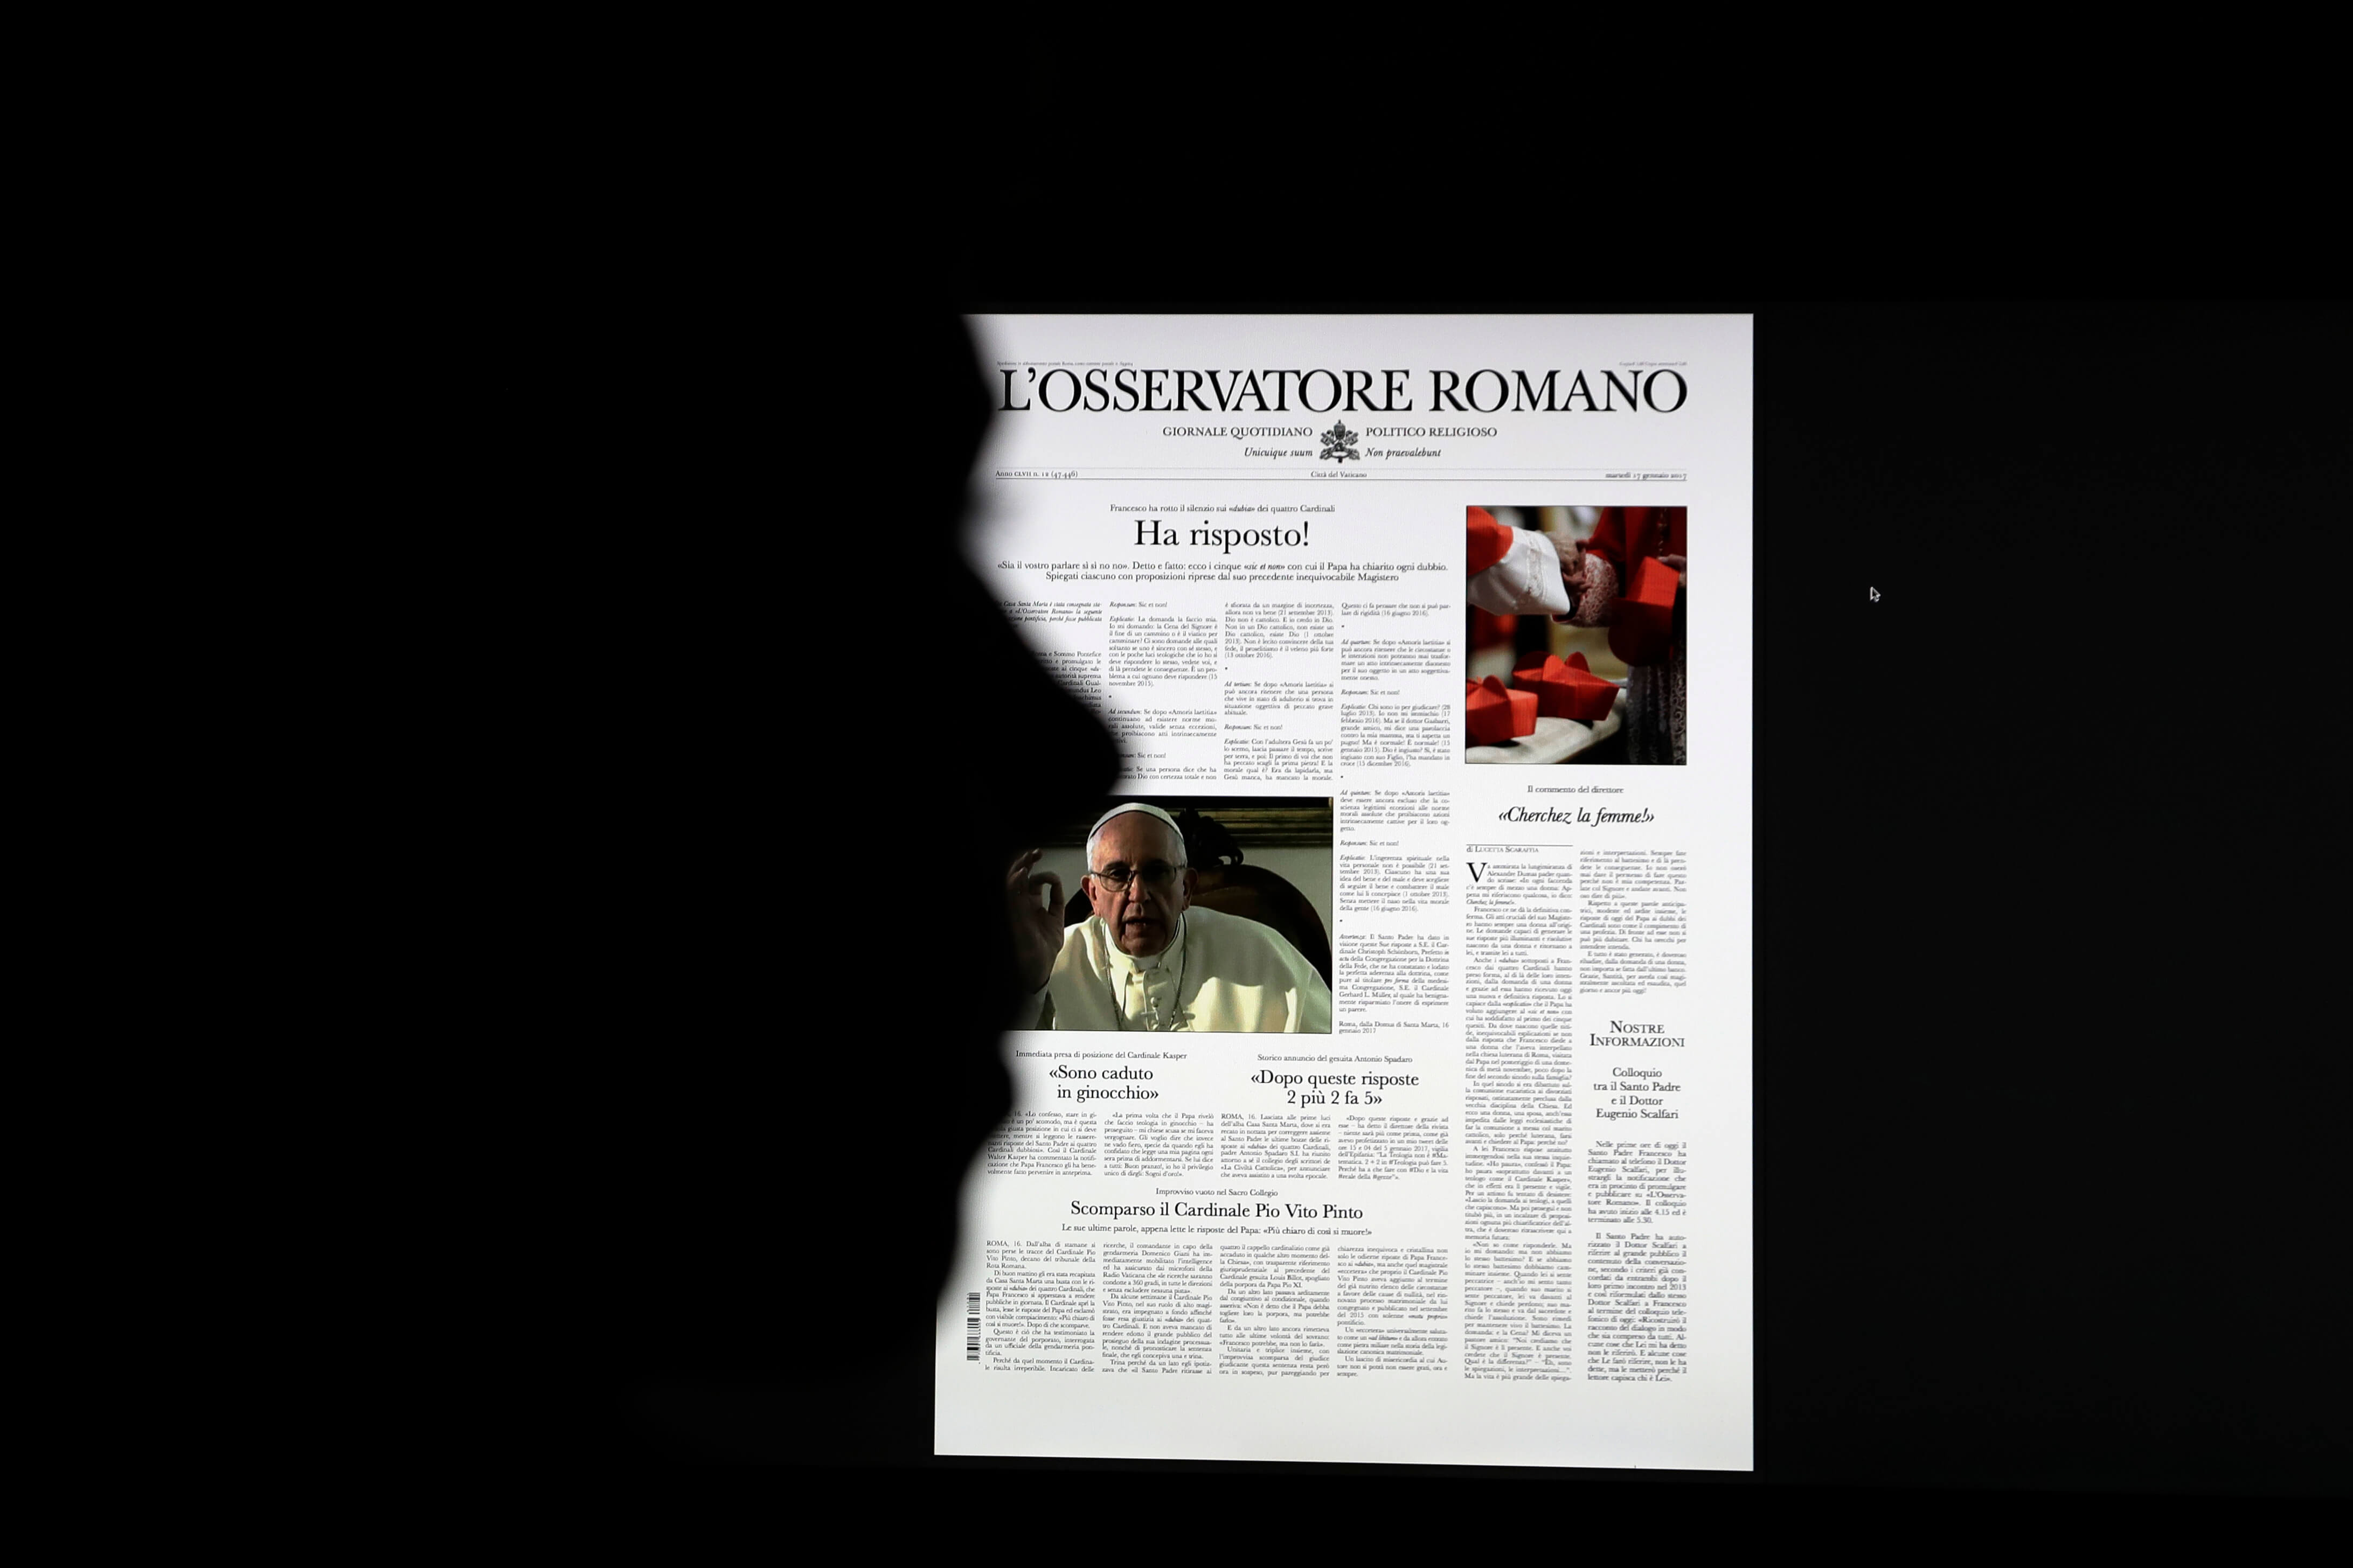 Una falsa copia del periódico vaticano L'Osservatore Romano, se exhibe en un monitor en Roma. (AP)